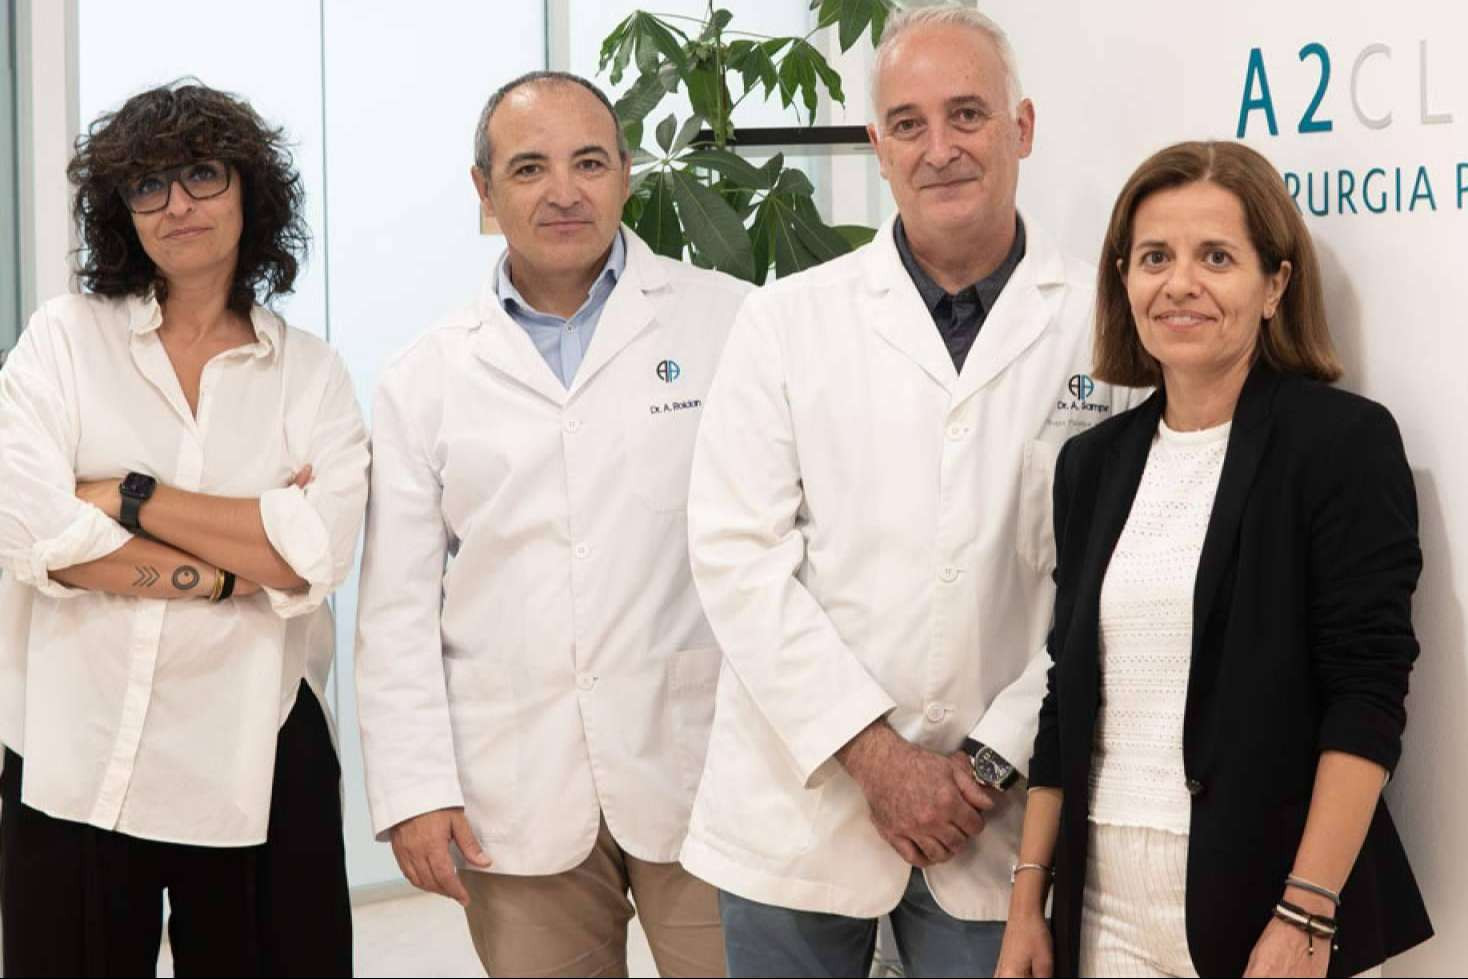  A2Clinic destaca en Barcelona por ofrecer distintos tipos de cirugías estéticas y reparadoras 